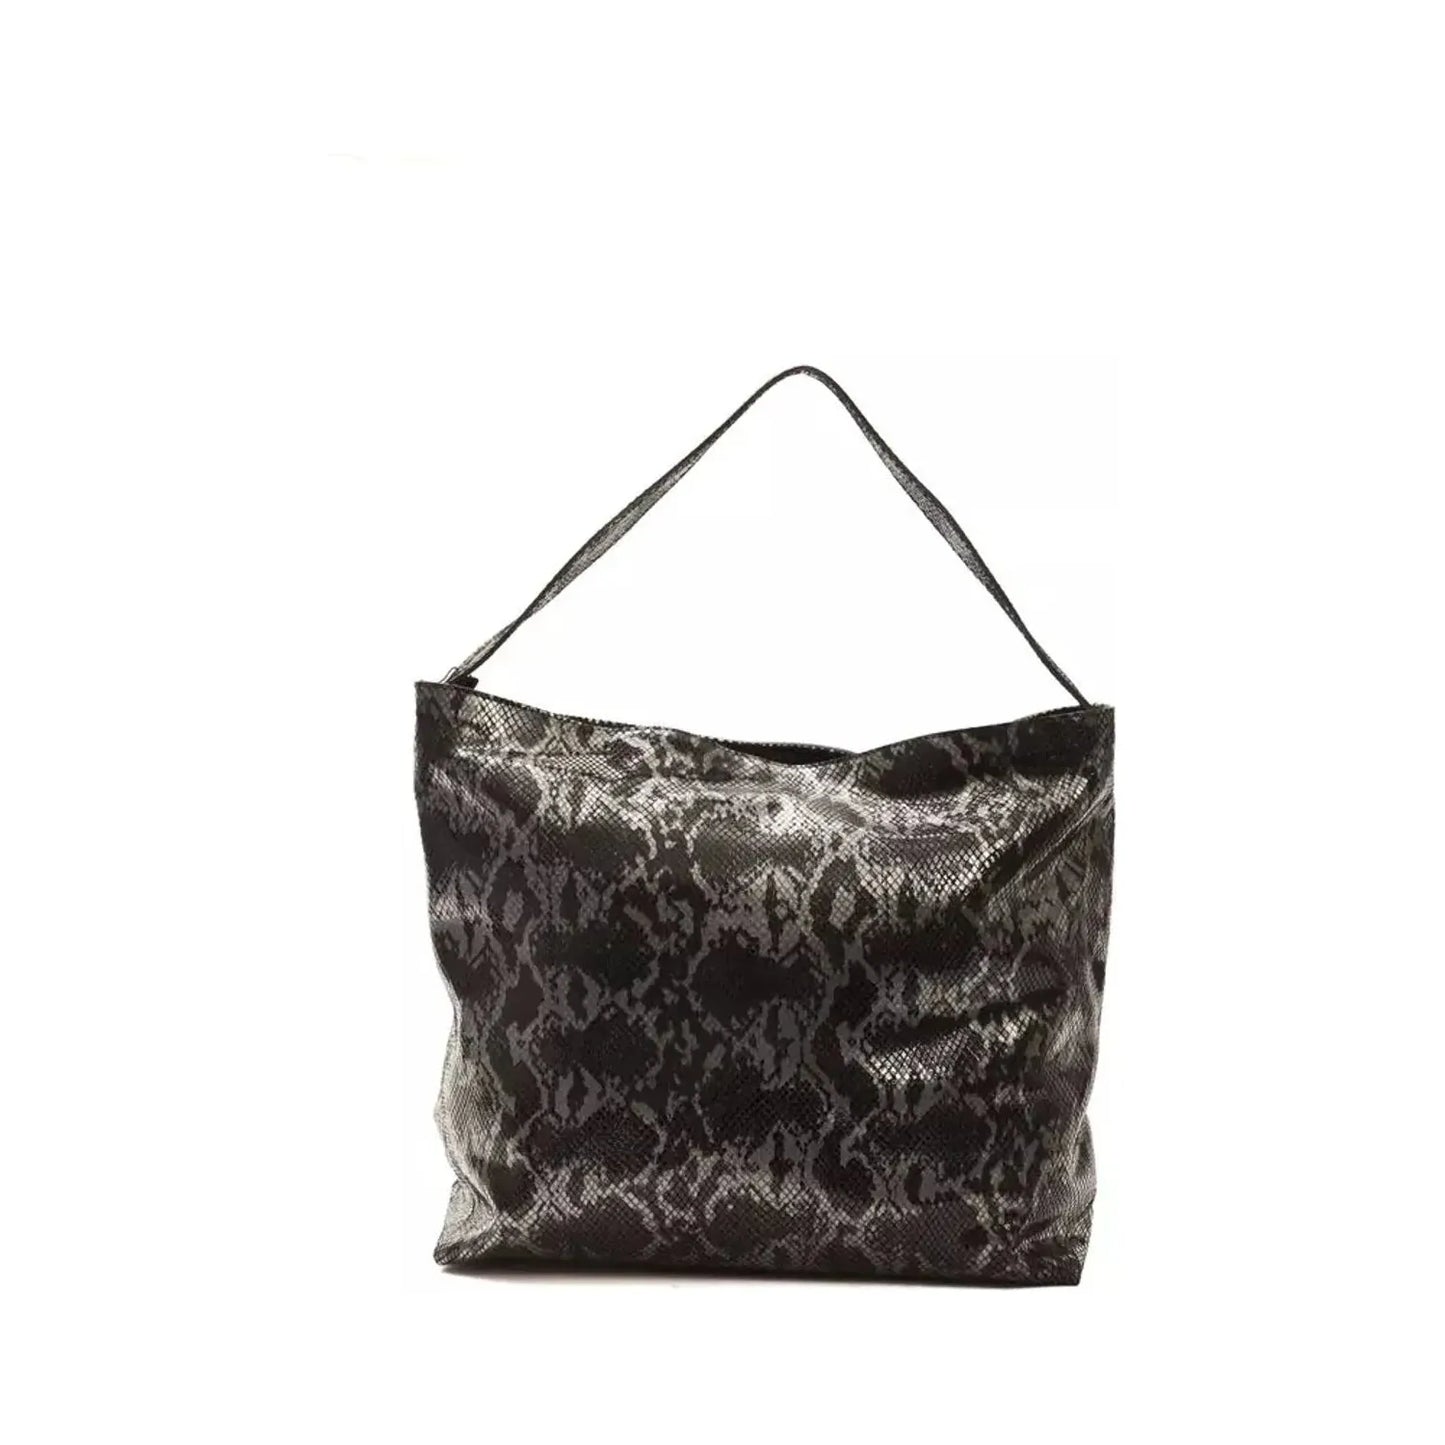 Pompei Donatella Chic Python Print Leather Shoulder Bag gray-leather-shoulder-bag-4 stock_product_image_5787_378581555-22-f62d0431-92c.webp